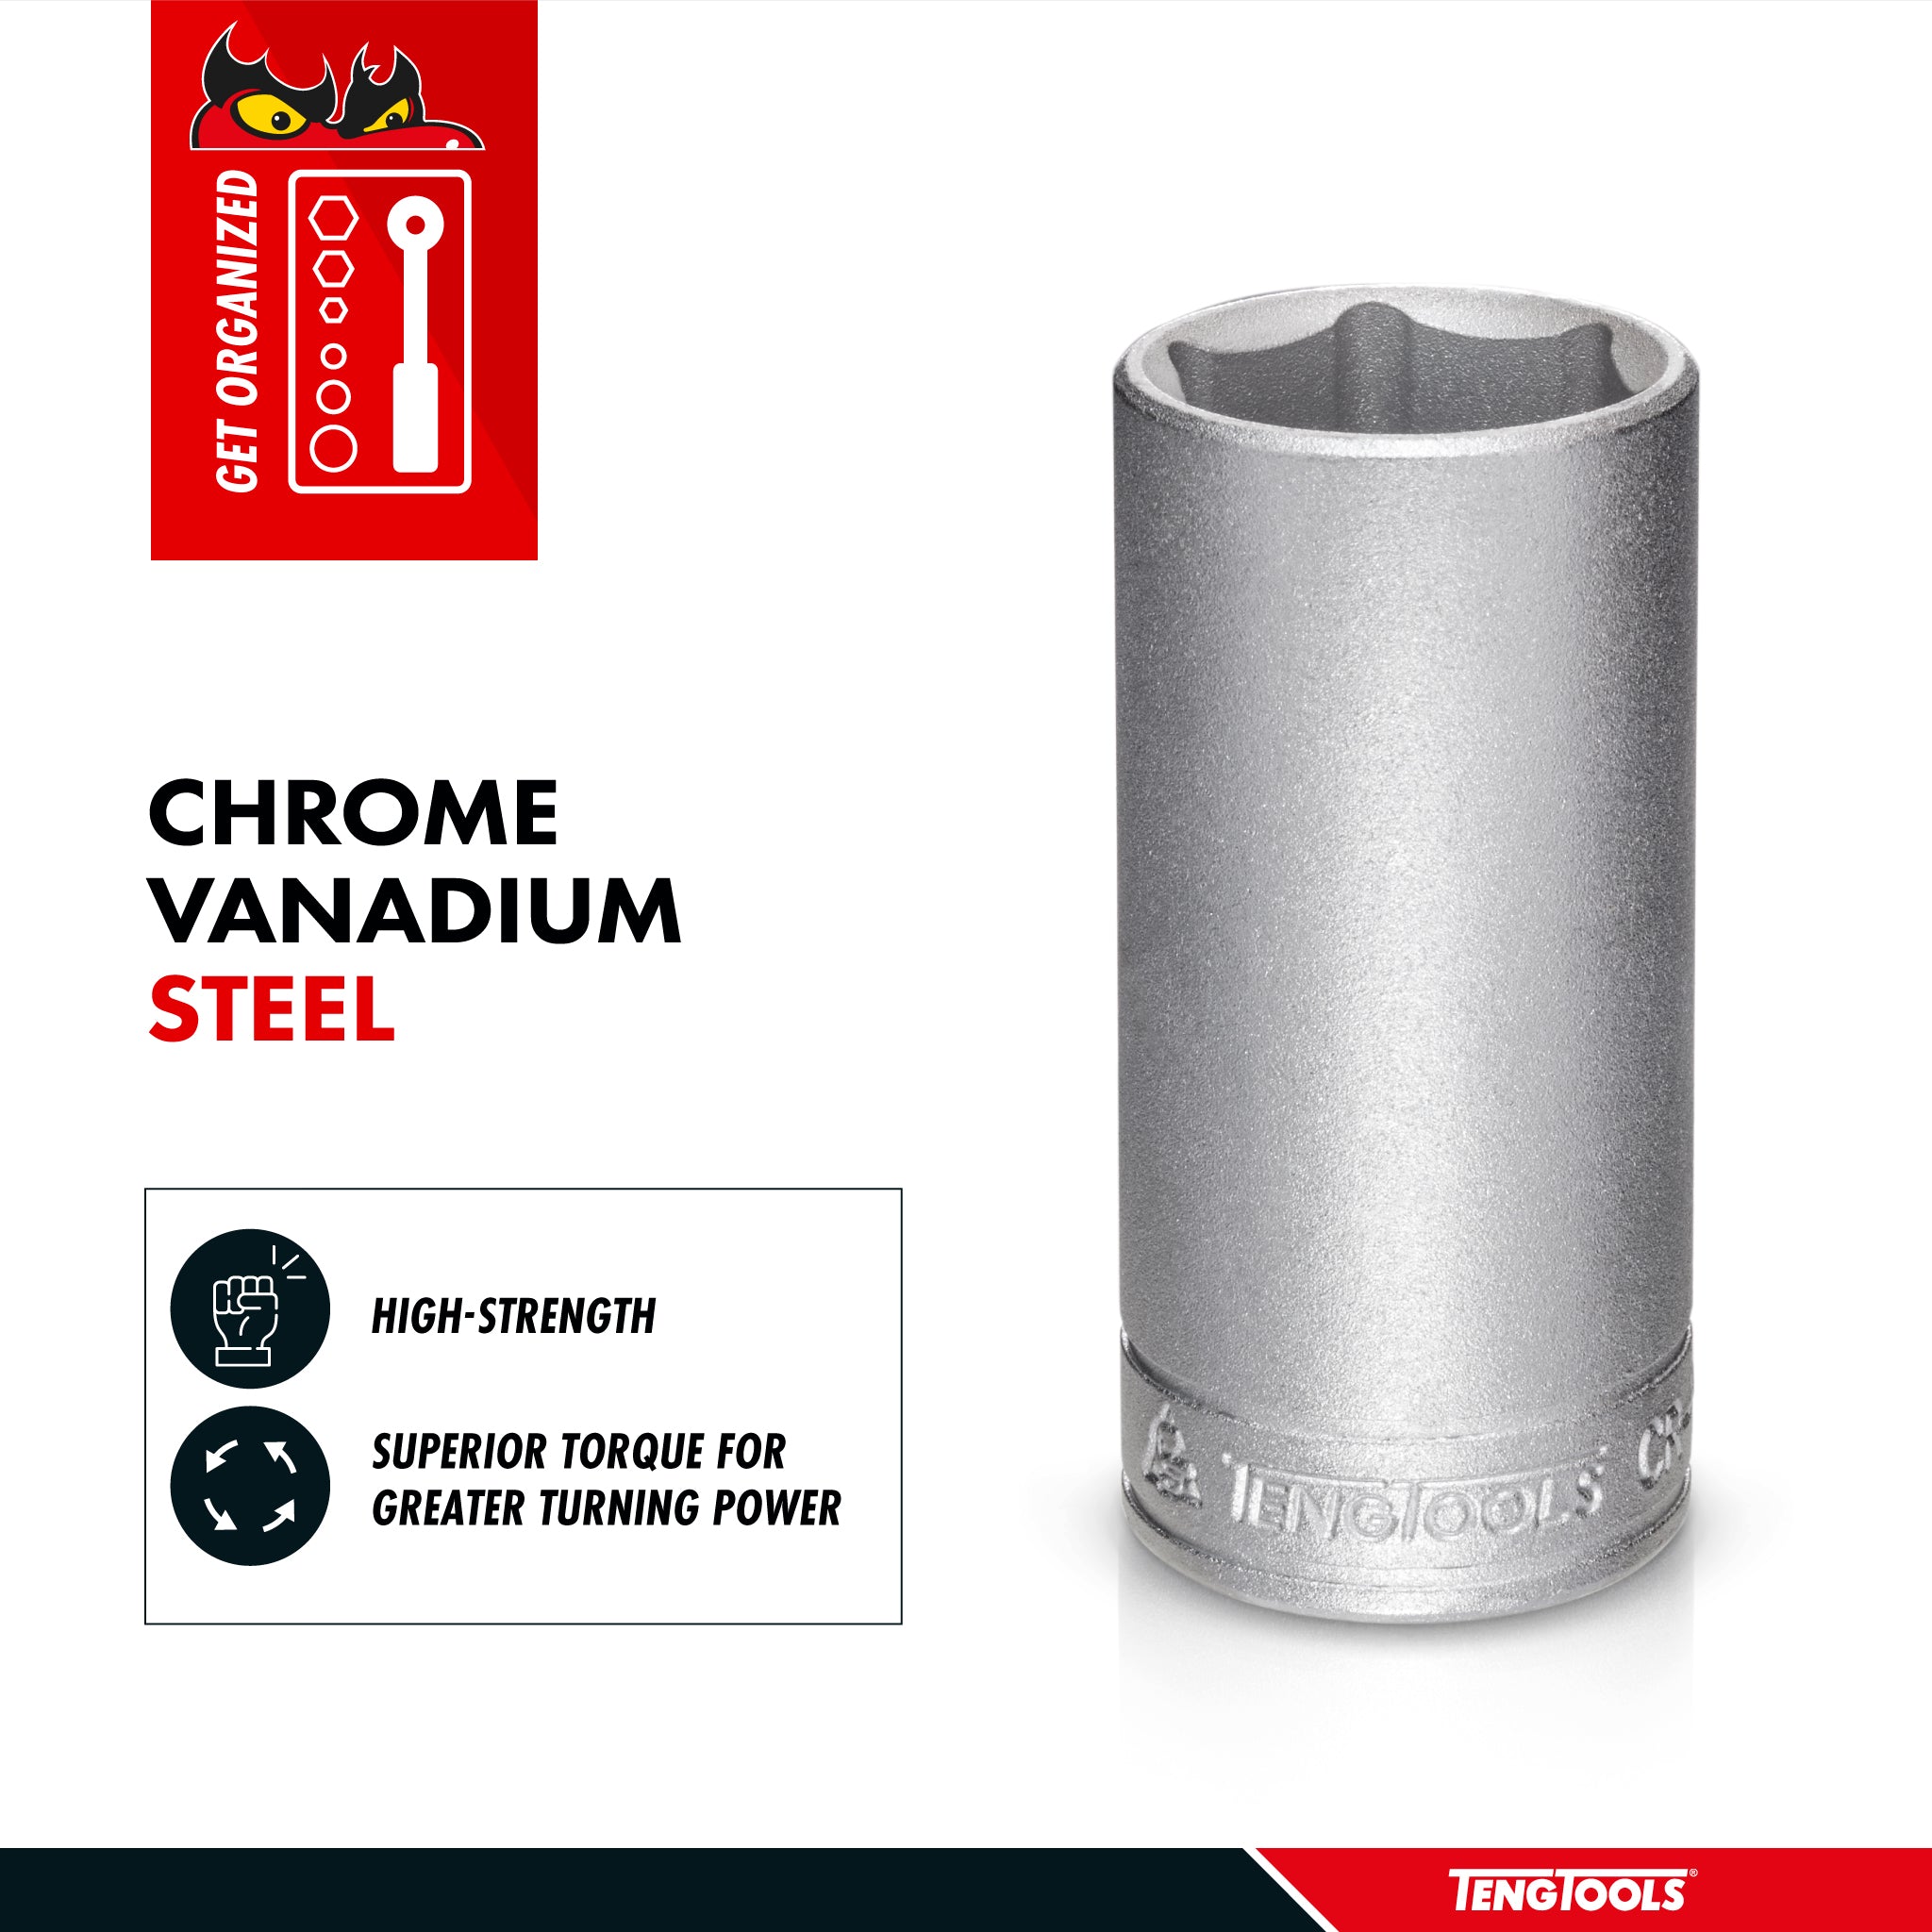 Teng Tools 6 Point SAE Deep 1/4 Inch Drive Chrome Vanadium Sockets - 7/32